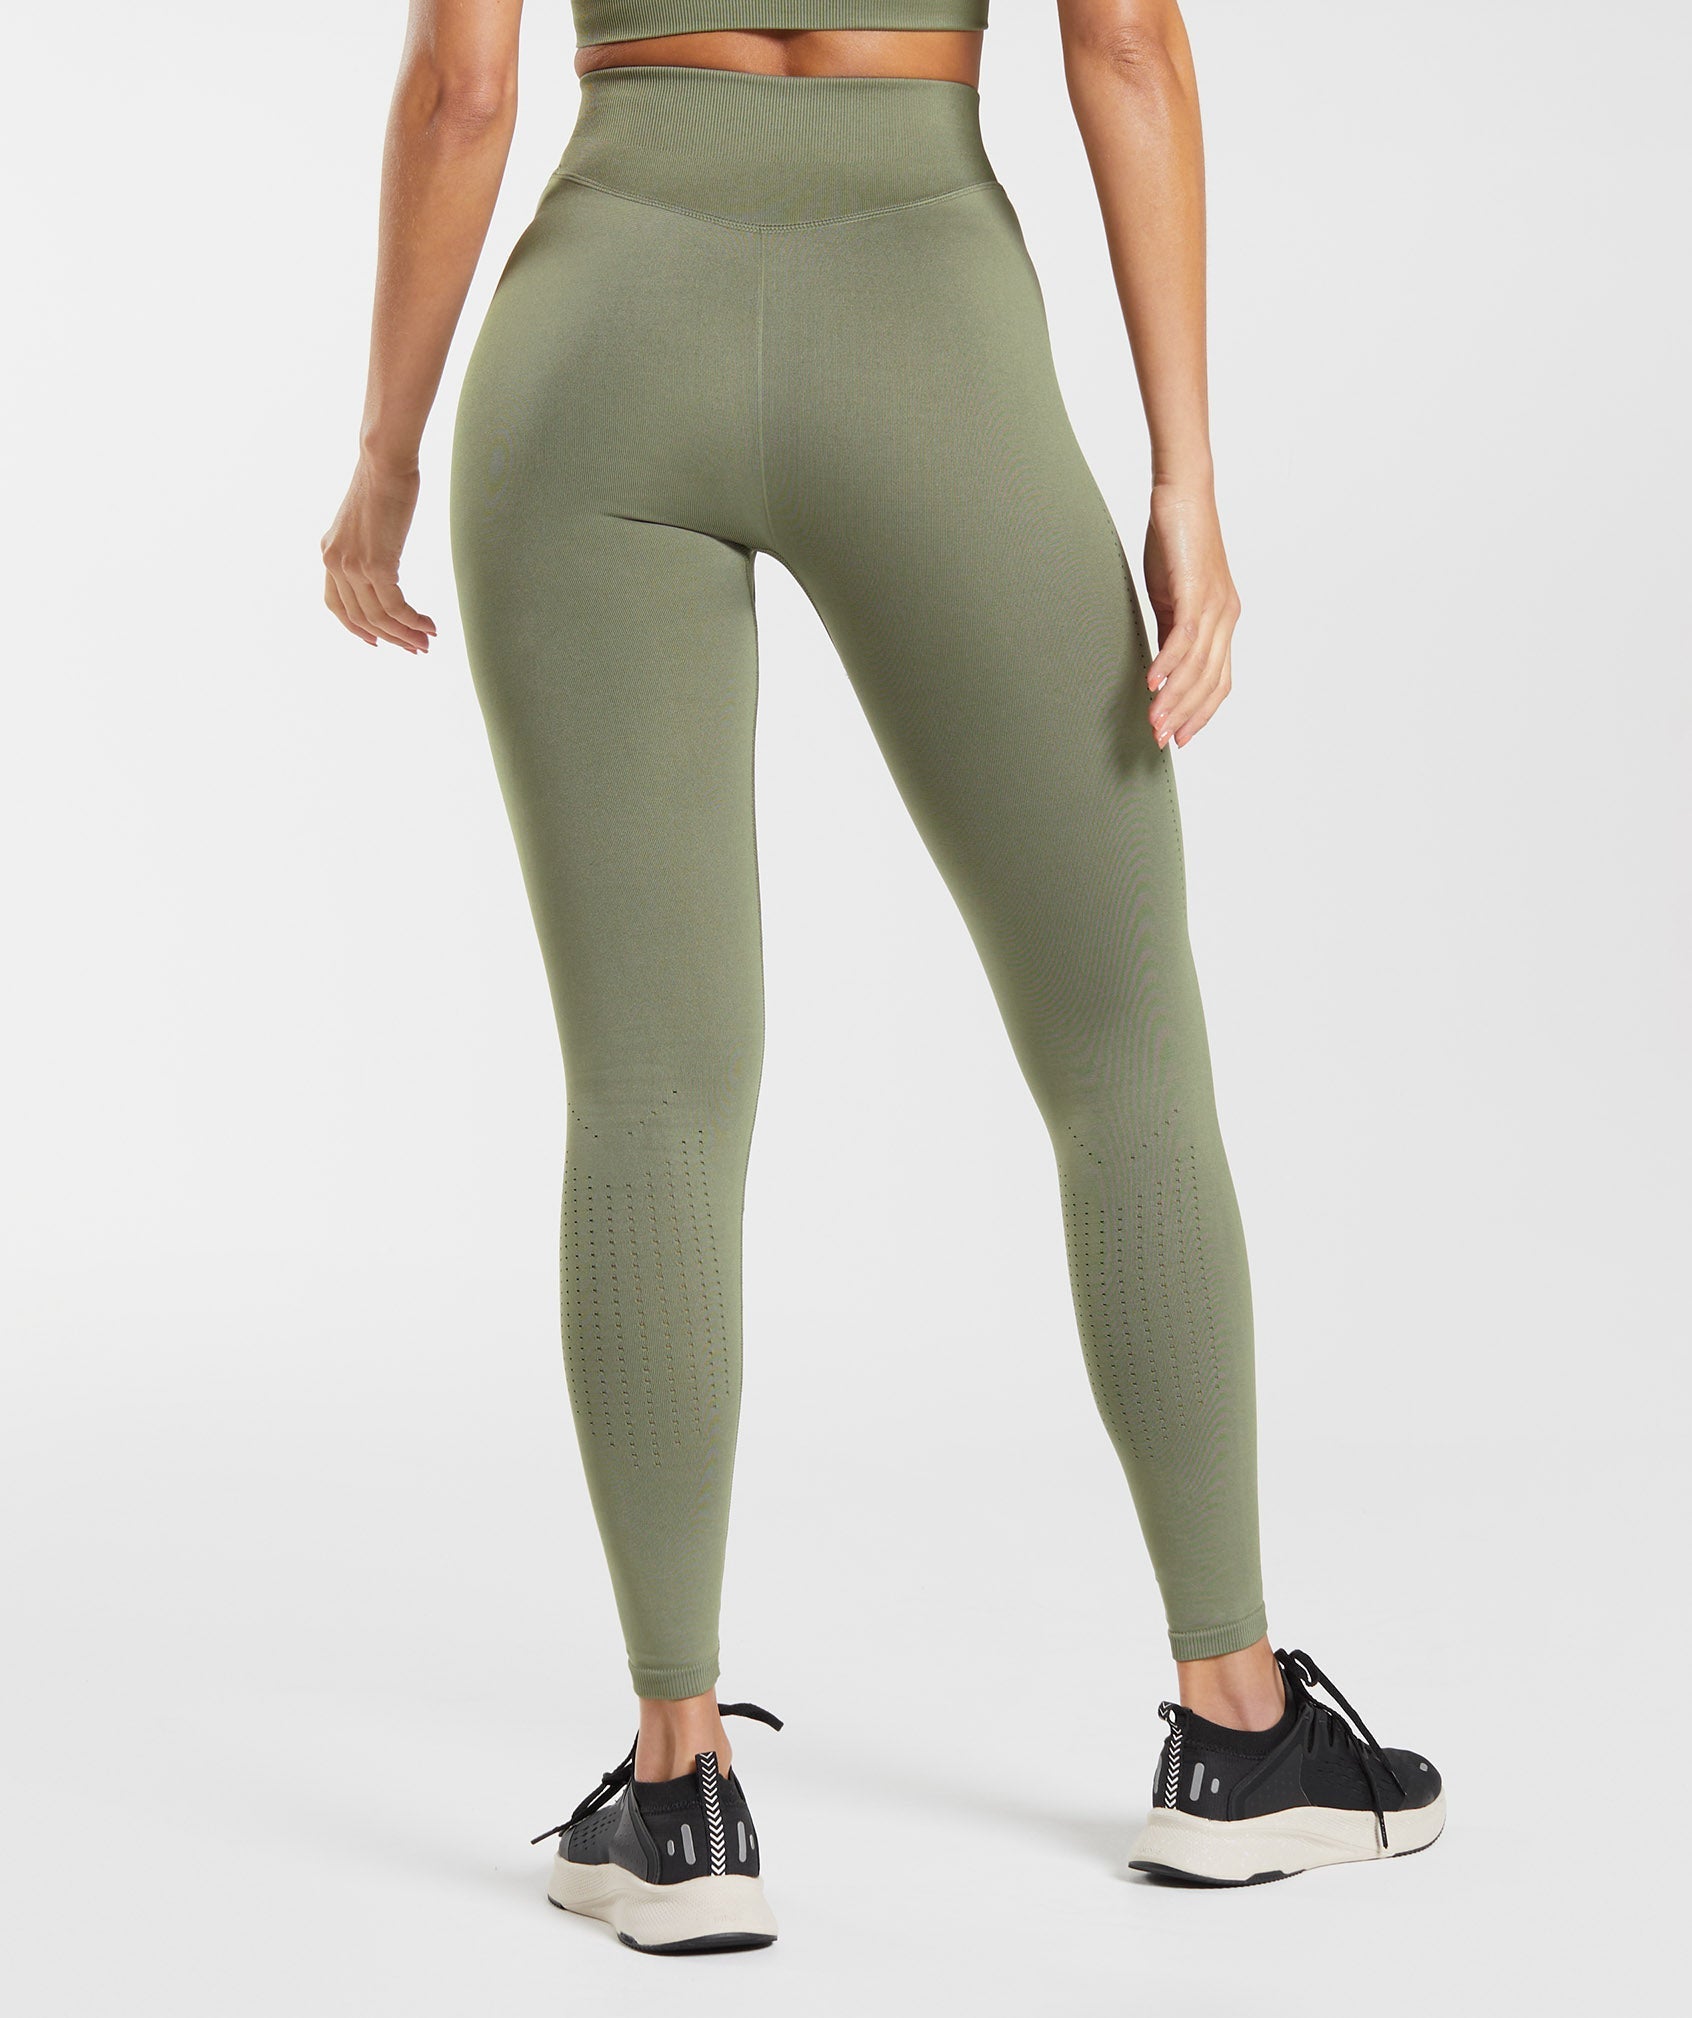 Seamless leggings - Khaki green - Ladies